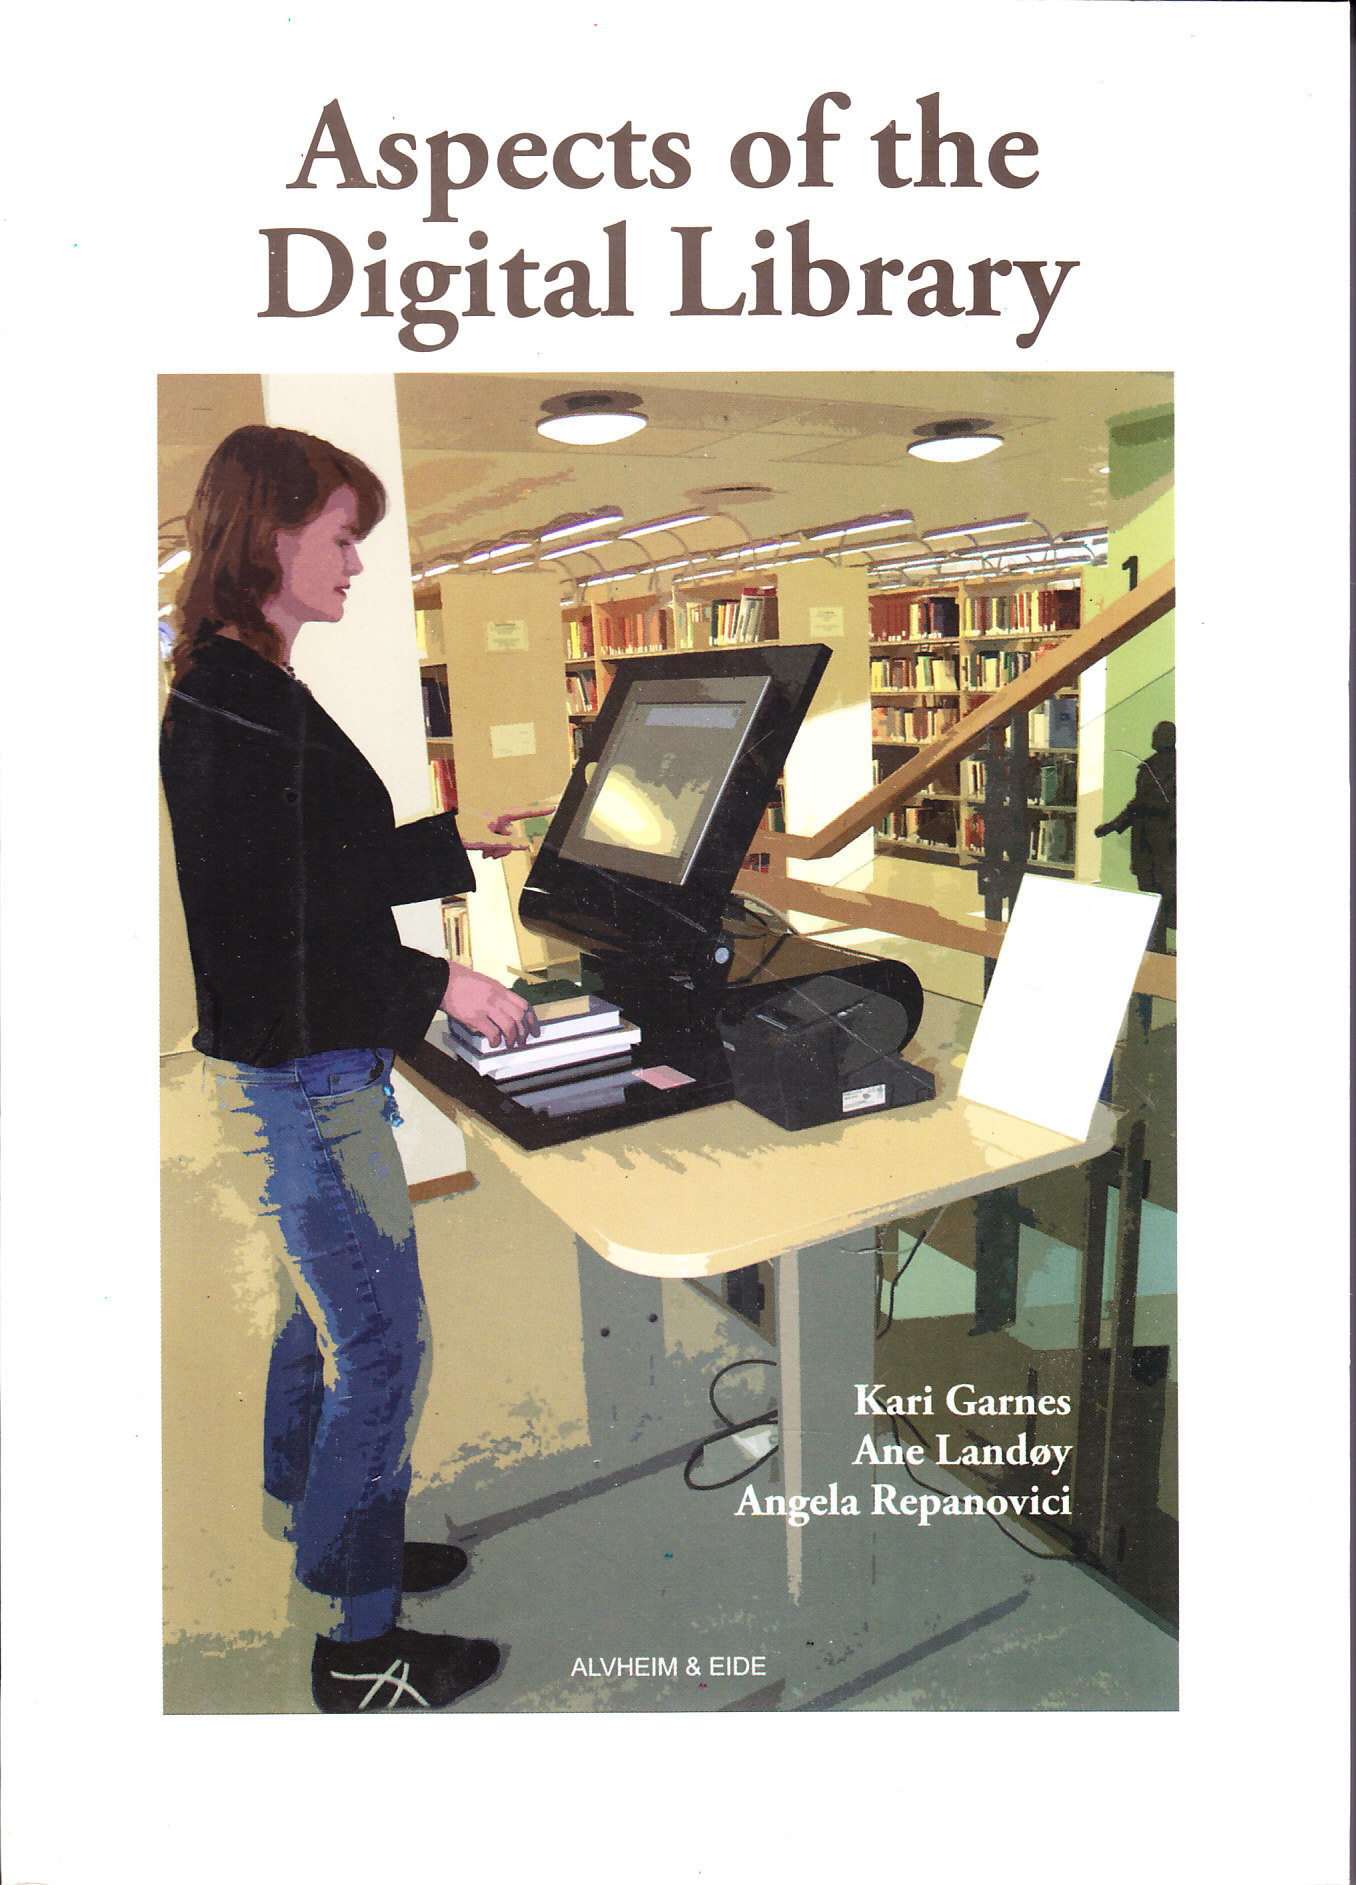 Aspects of the digital library - Kari Garnes, Ane Landoy, Angela Repanovici